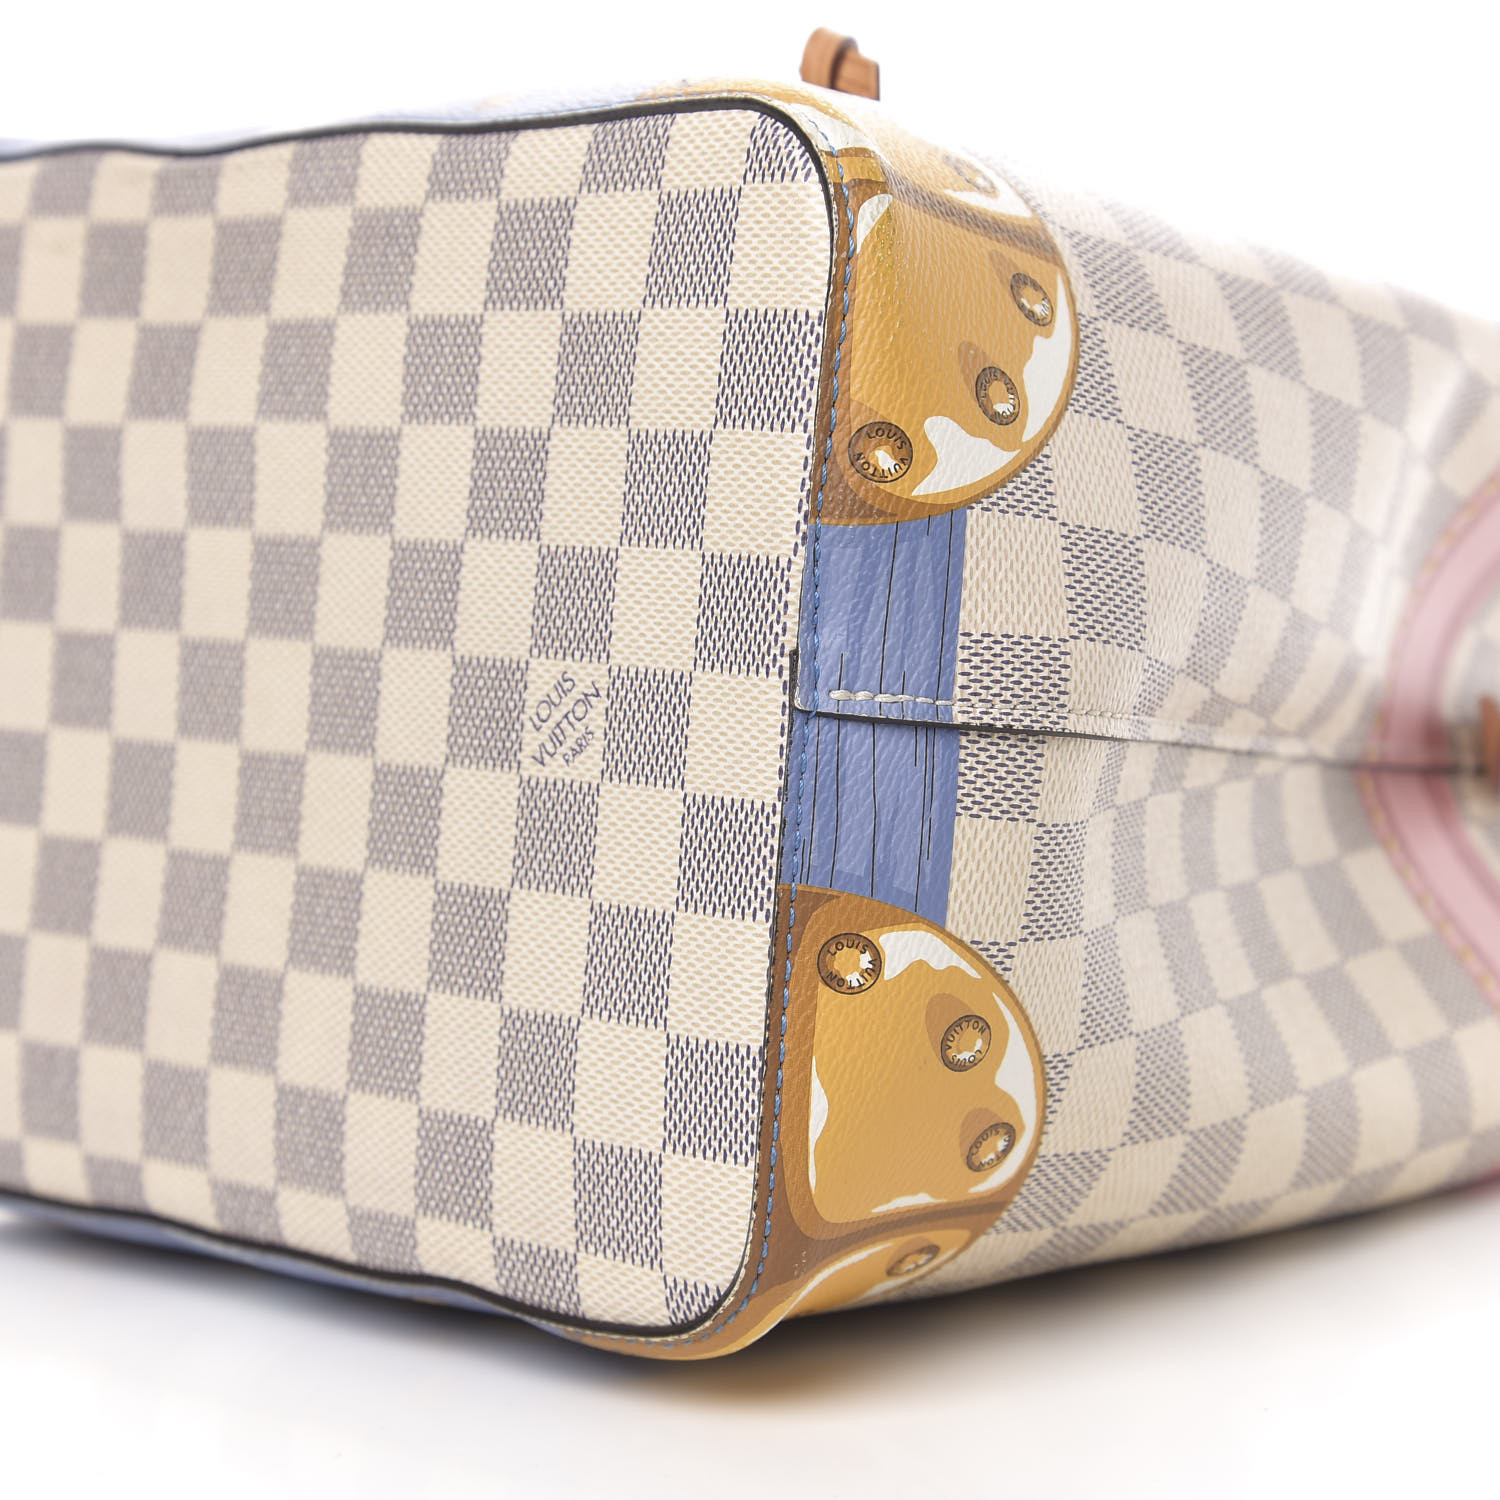 New IN BOX Louis Vuitton SUMMER TRUNKS NEO NOE Damier Azur Handbag